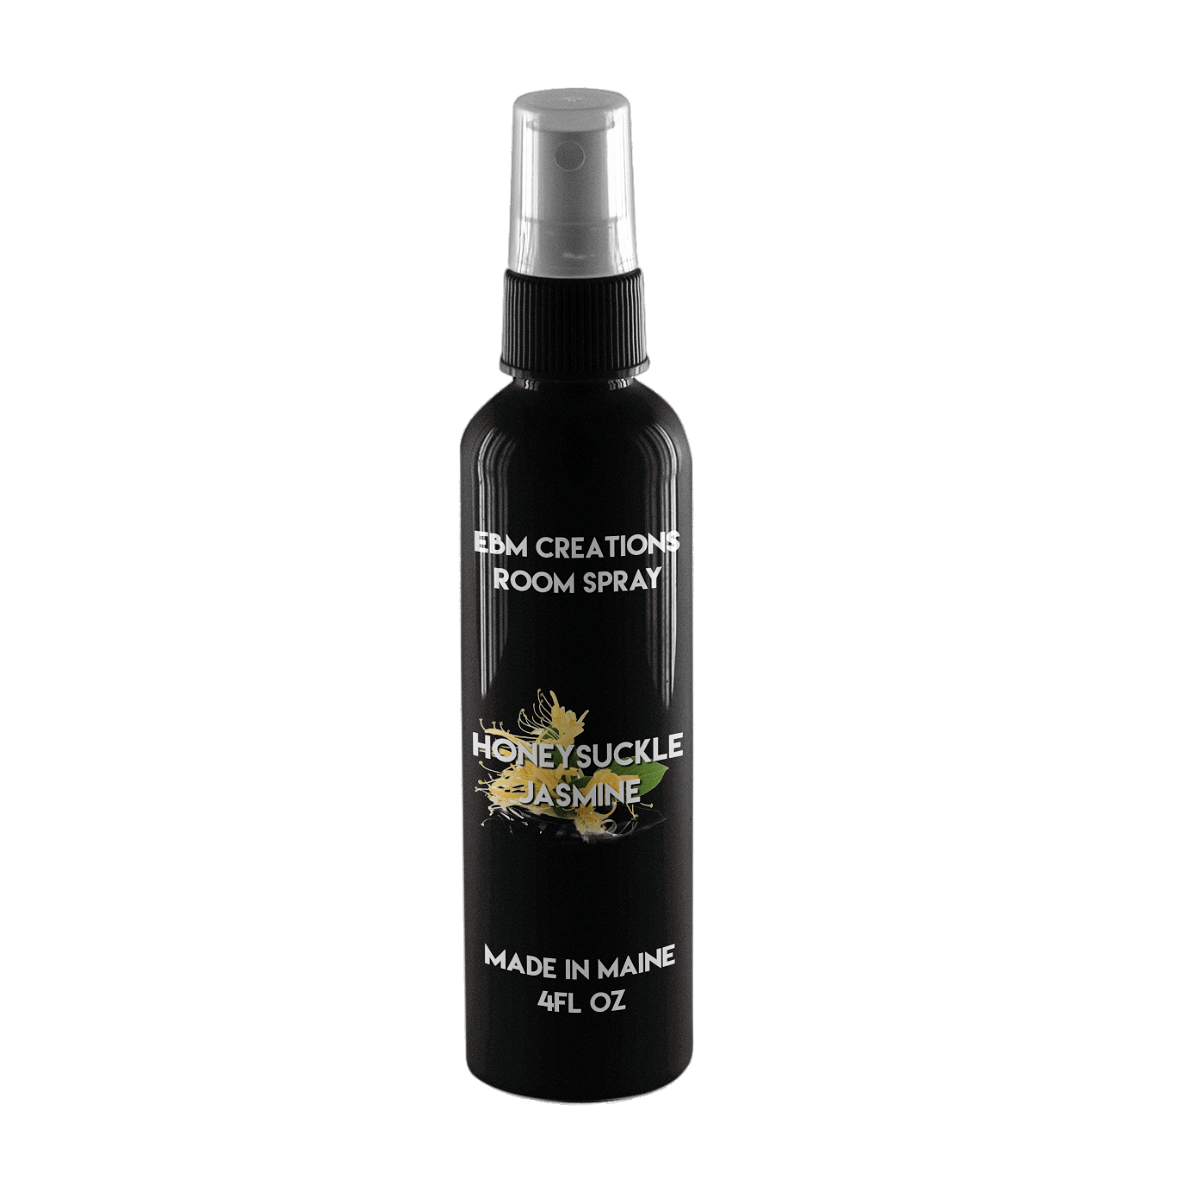 Honeysuckle & Jasmine - Room Spray 4oz Bottle